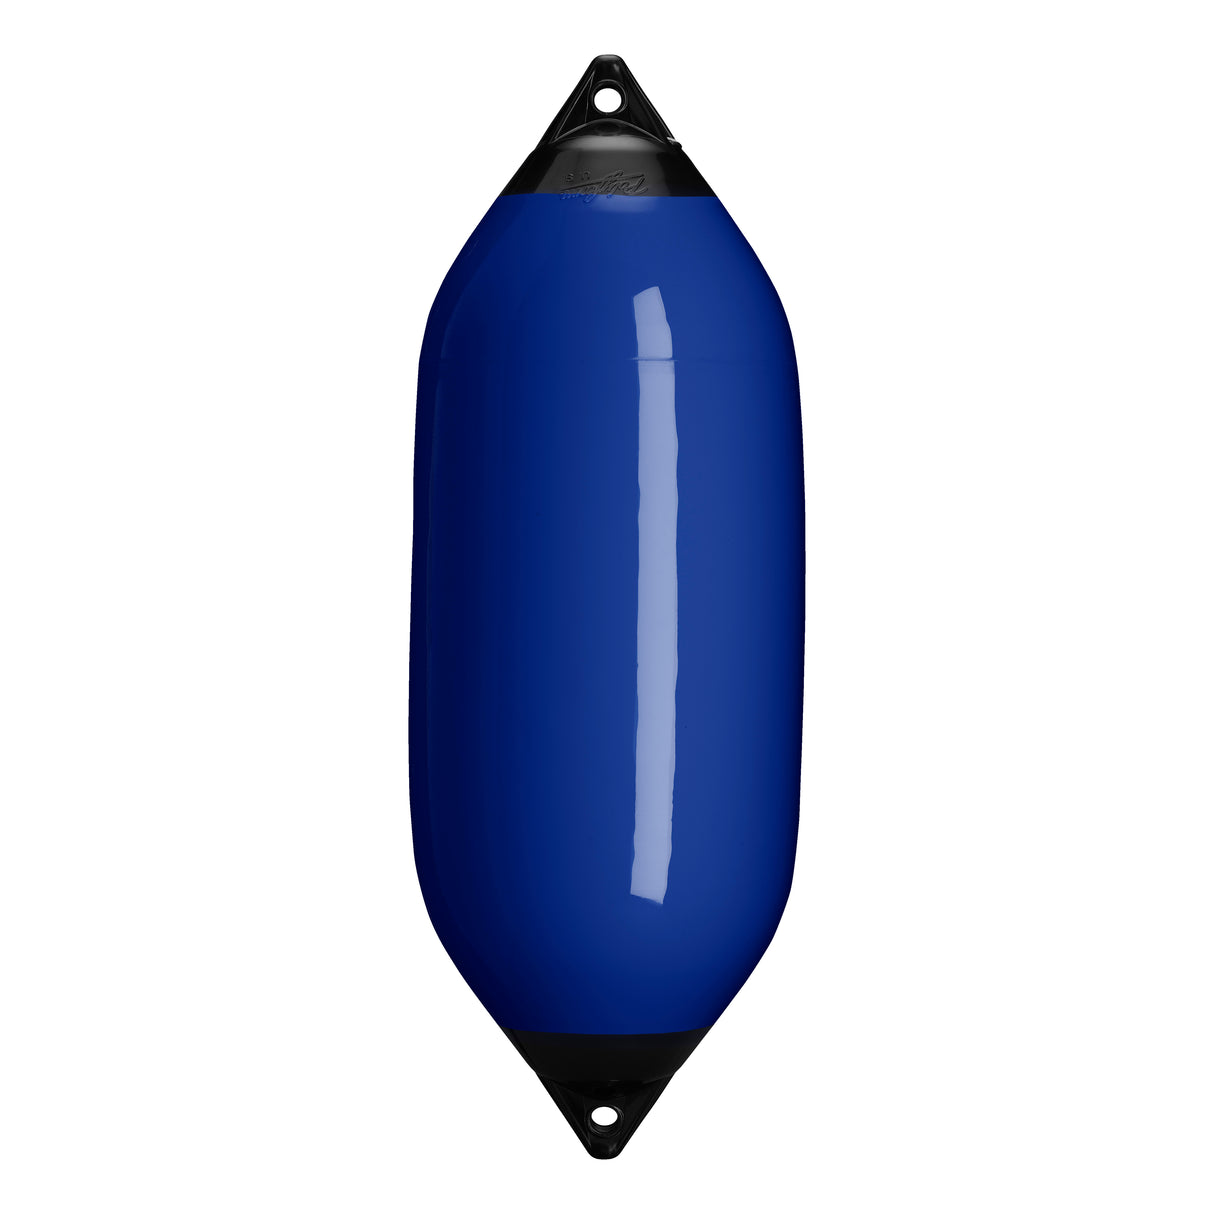 Cobalt Blue boat fender with Black-Top, Polyform F-7